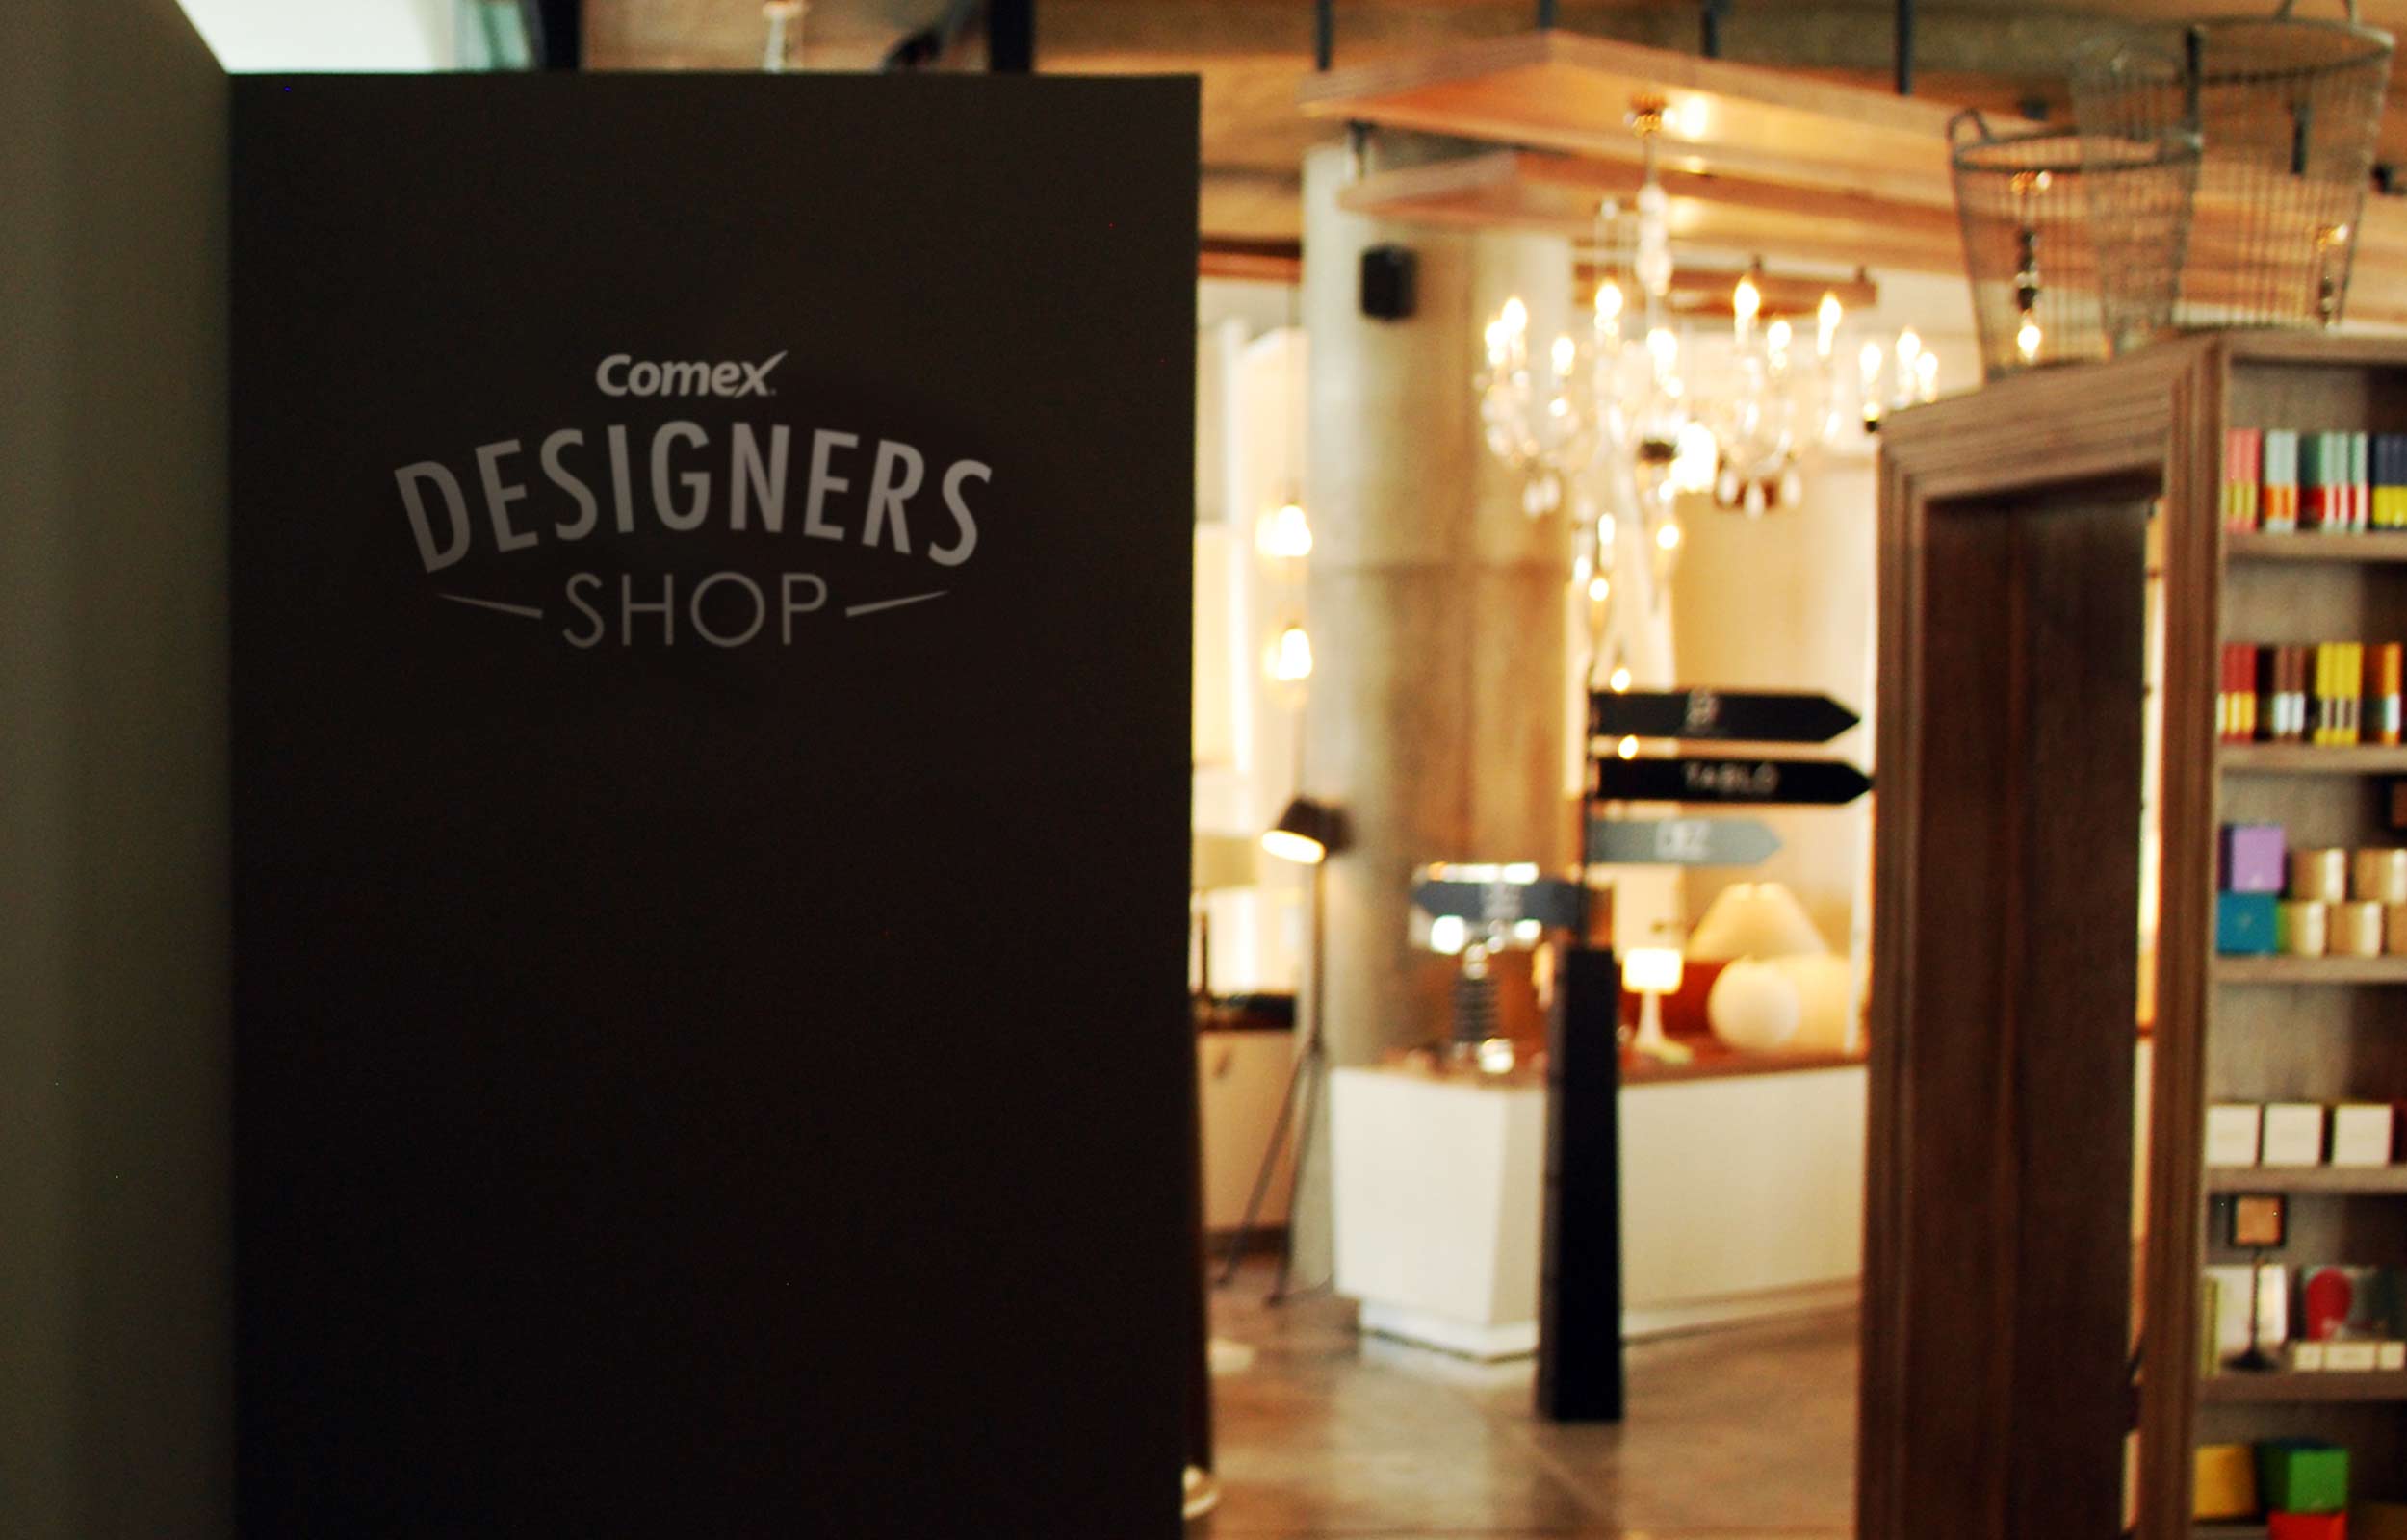 Comex Designers Shop - leolab